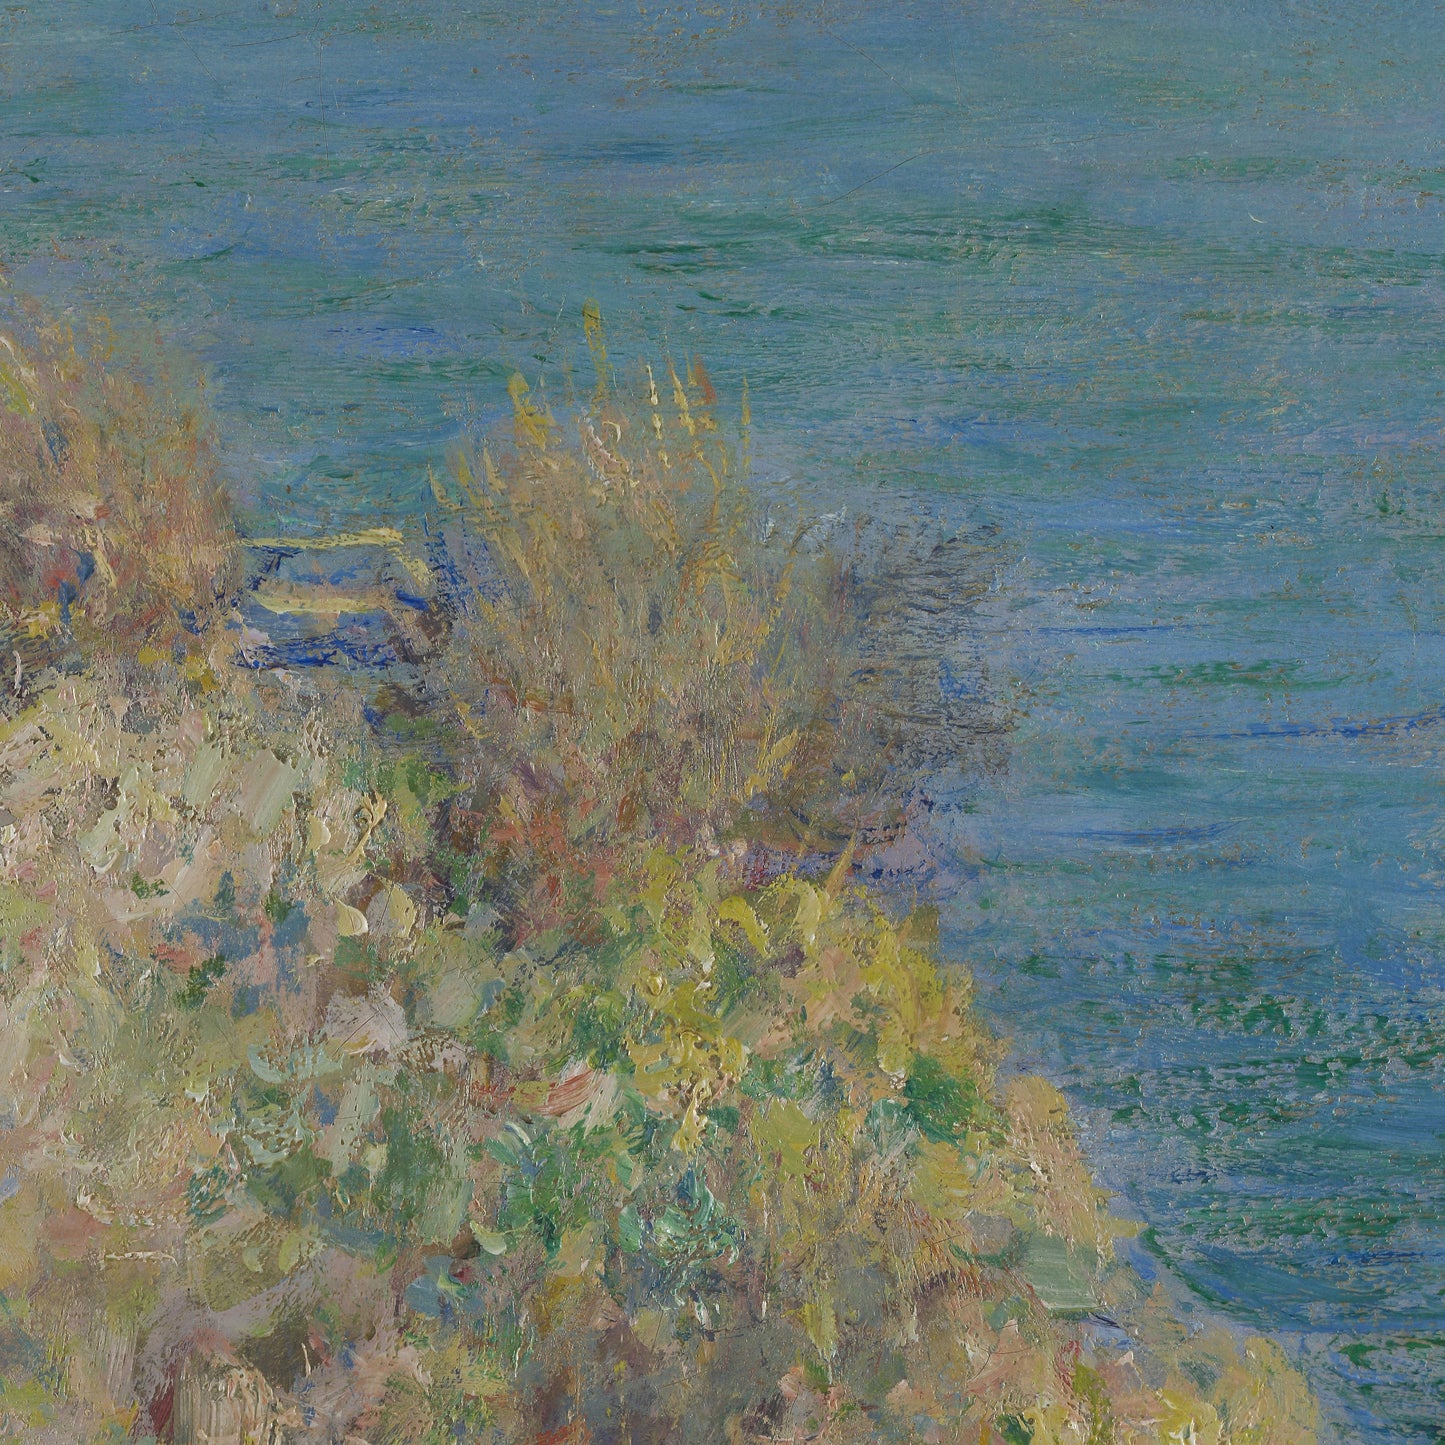 La maison du pêcheur, Varengeville by Claude Monet, 3d Printed with texture and brush strokes looks like original oil-painting, code:366